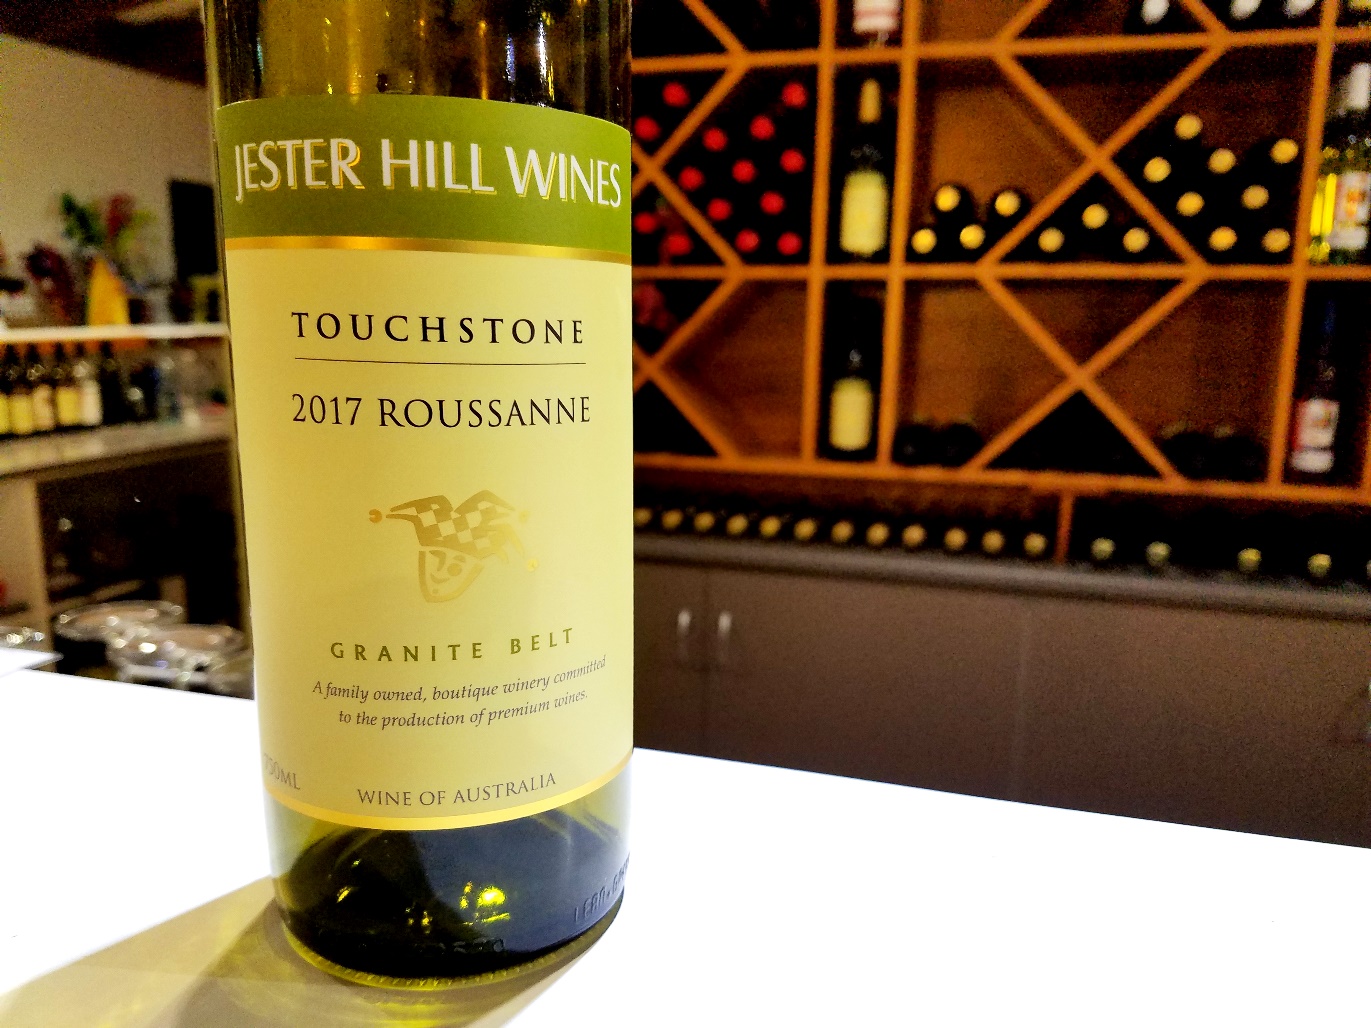 Jester Hill Wines, Touchstone Roussanne 2017, Granite Belt, Queensland, Australia, Wine Casual